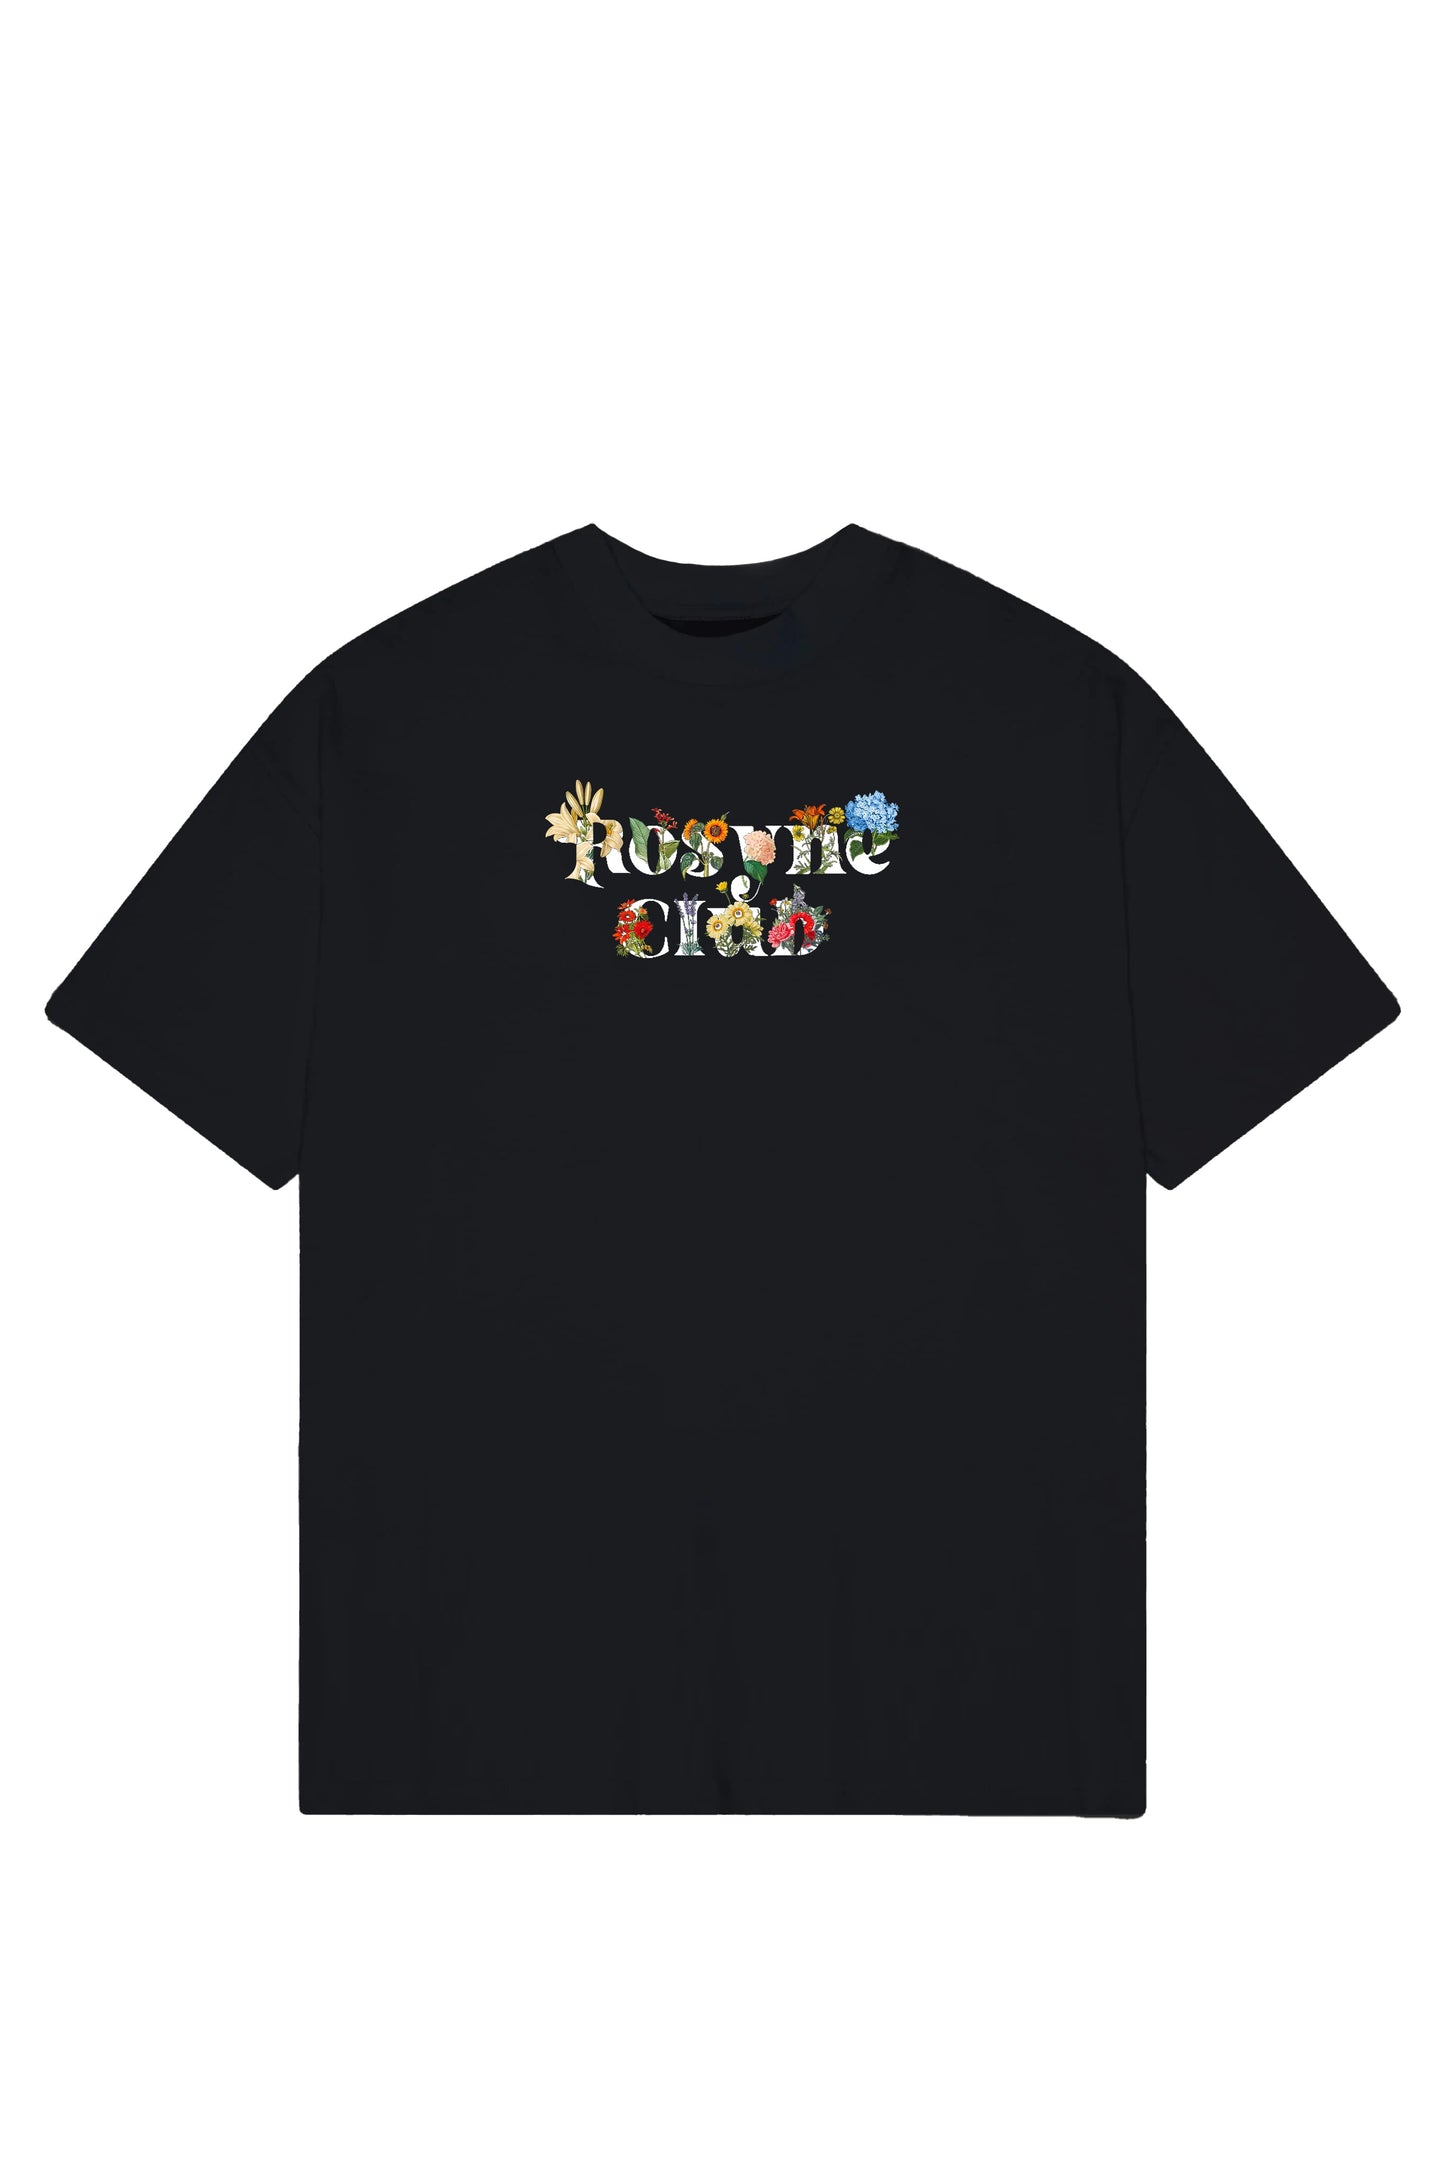 T-shirt Rosyne Black - Oversize - Rosyne Club